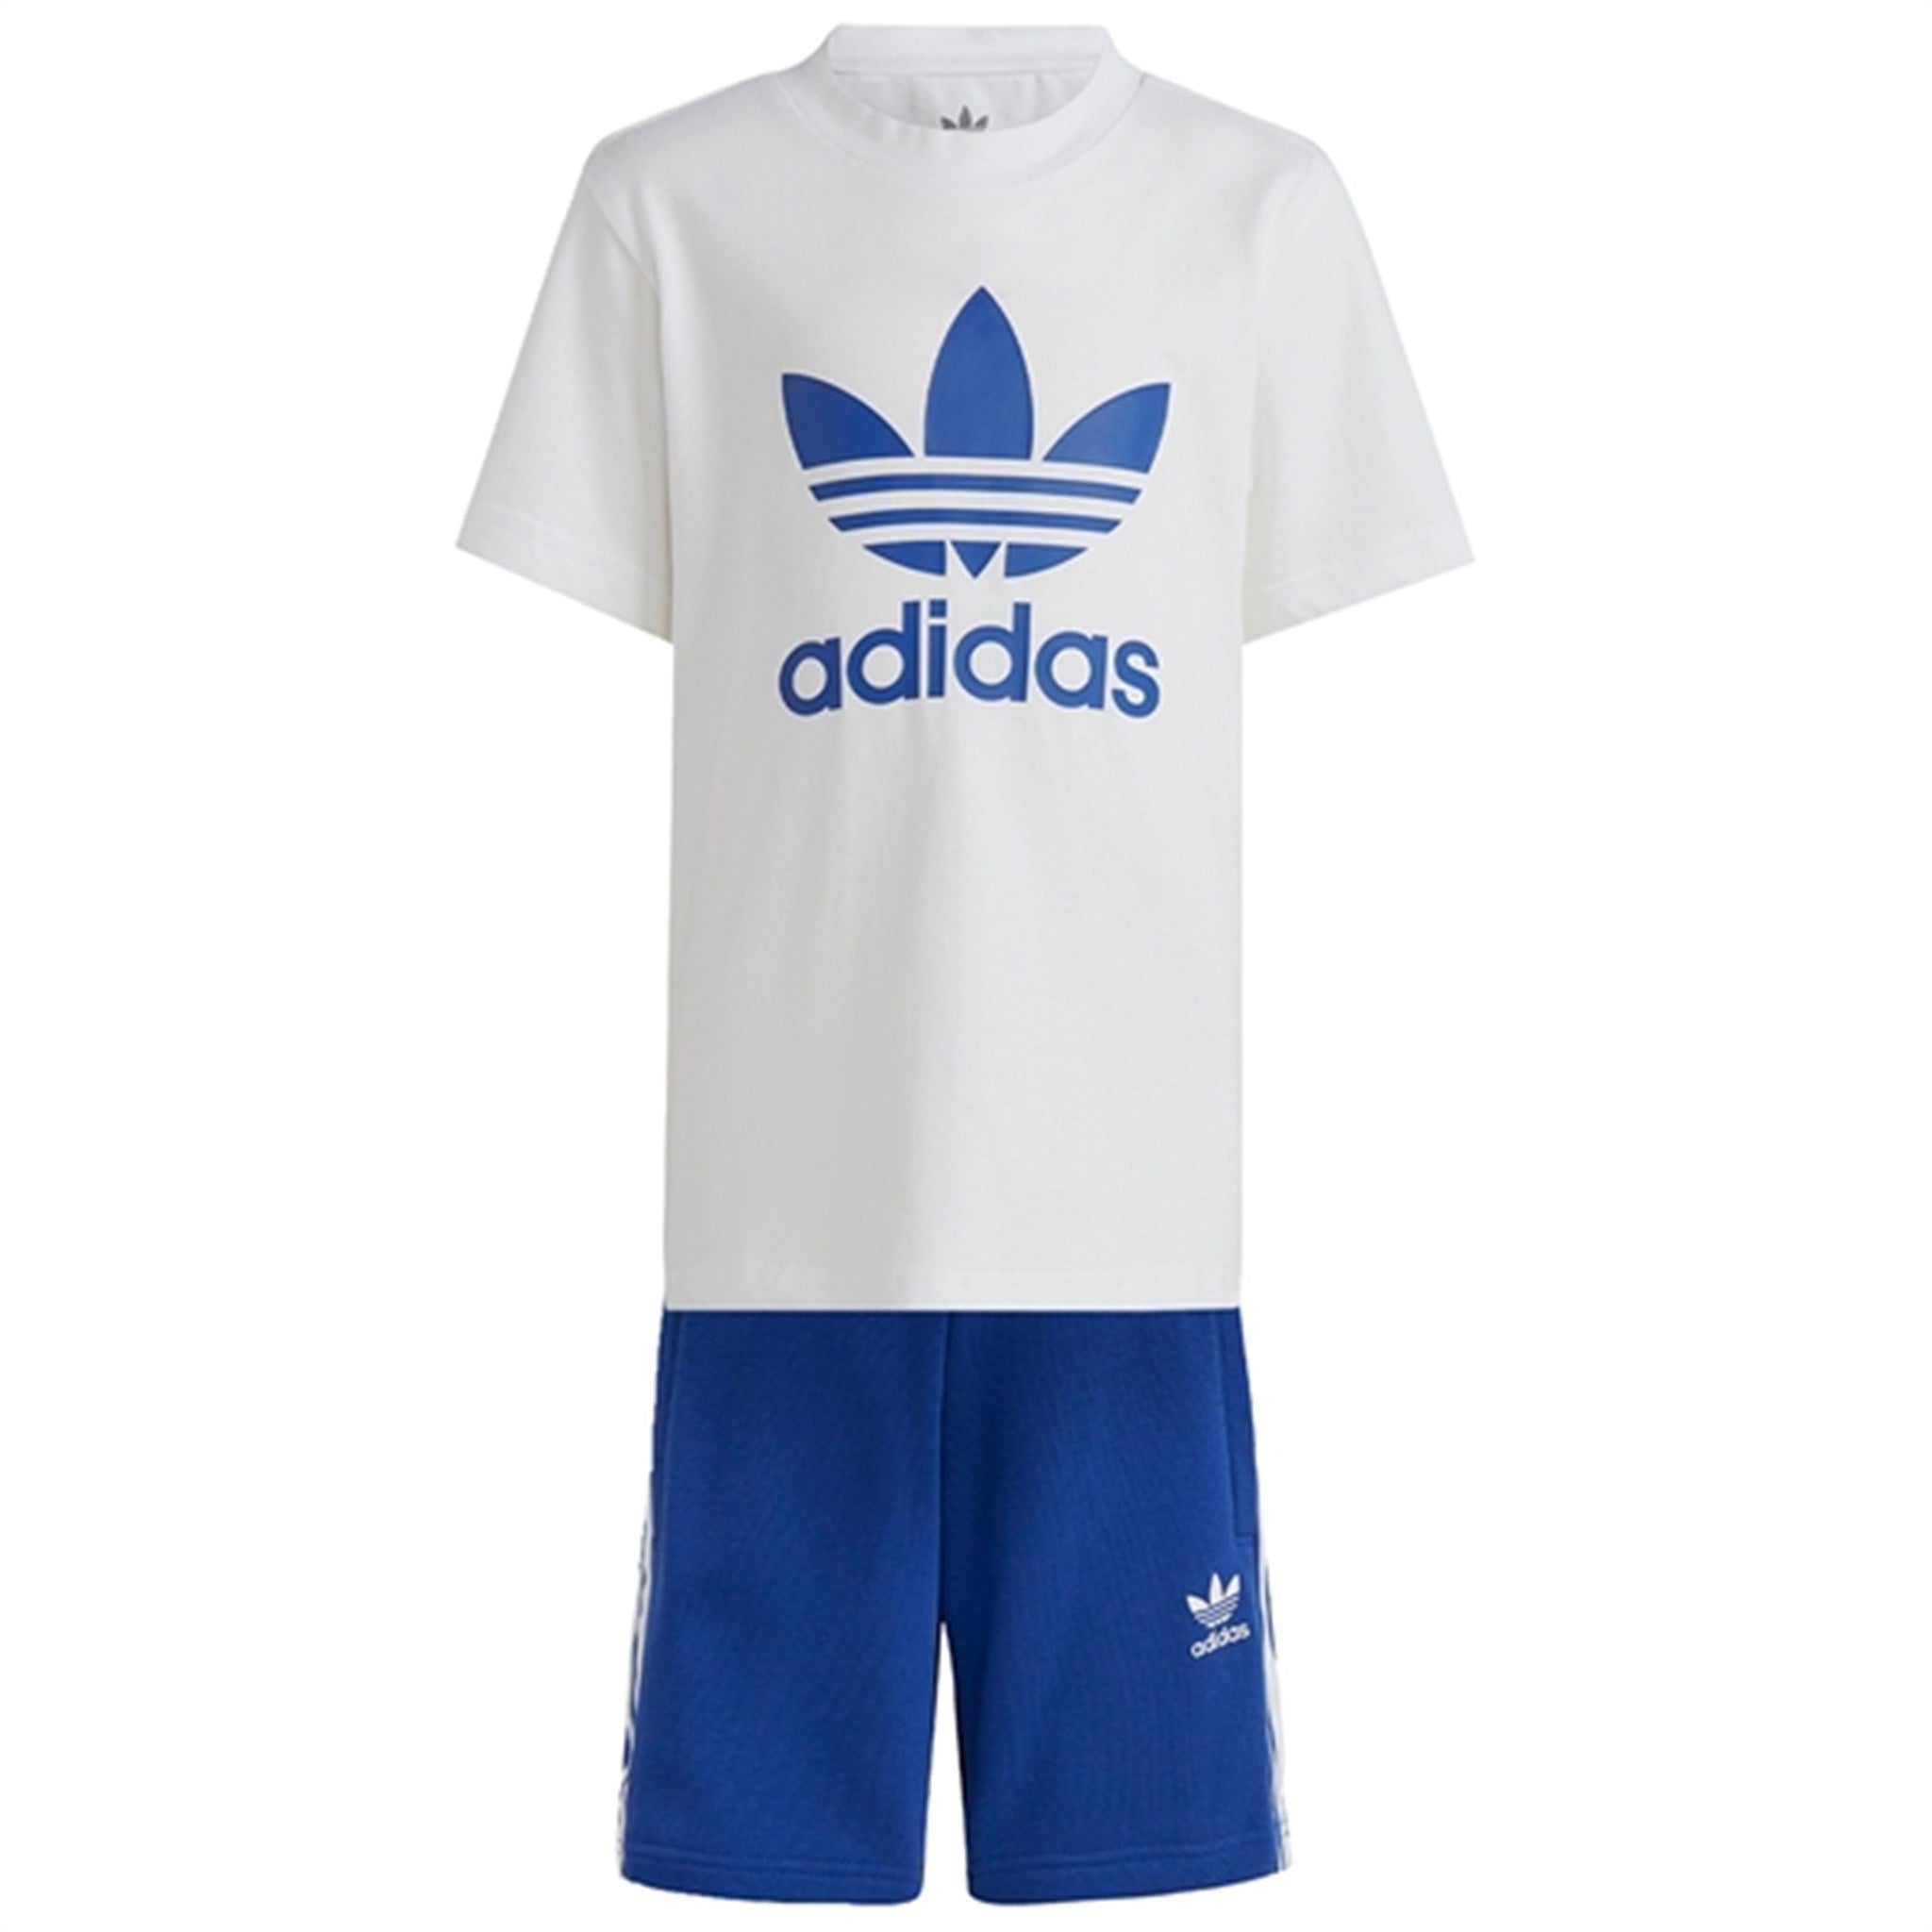 adidas Originals White / Blue Shorts Tee Set